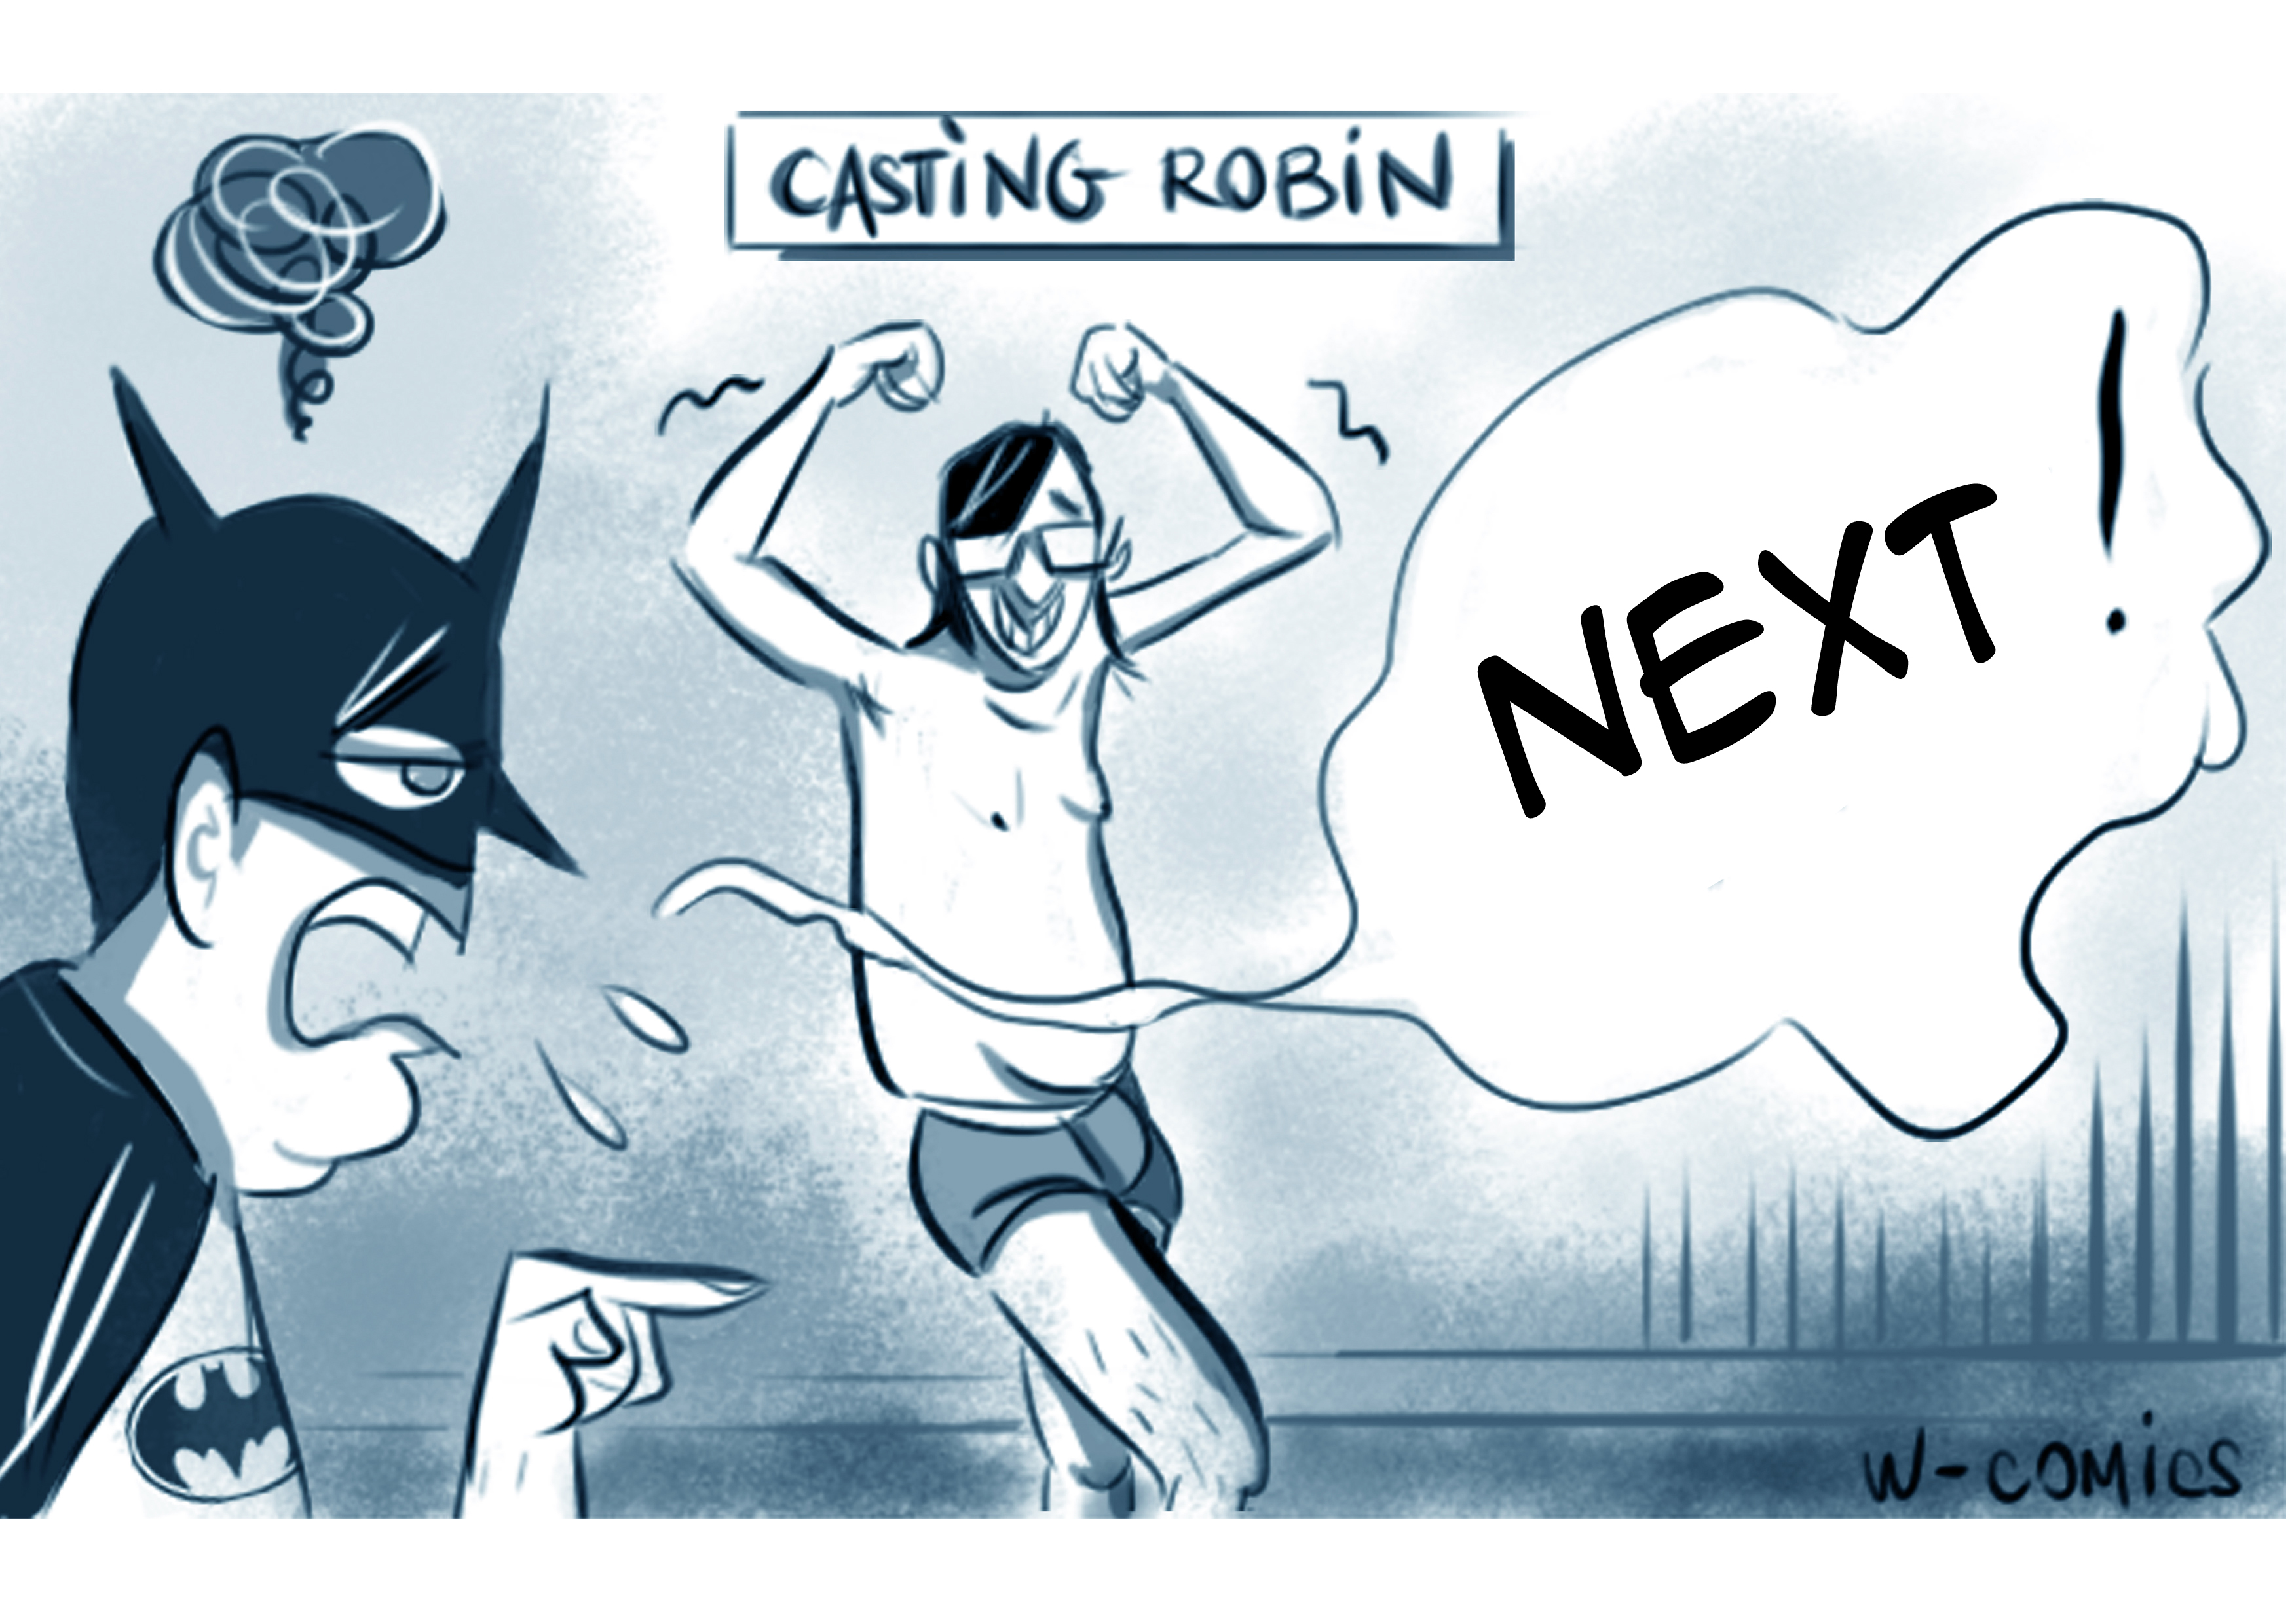 ROBIN CASTING illustration sketch w comics batman parody